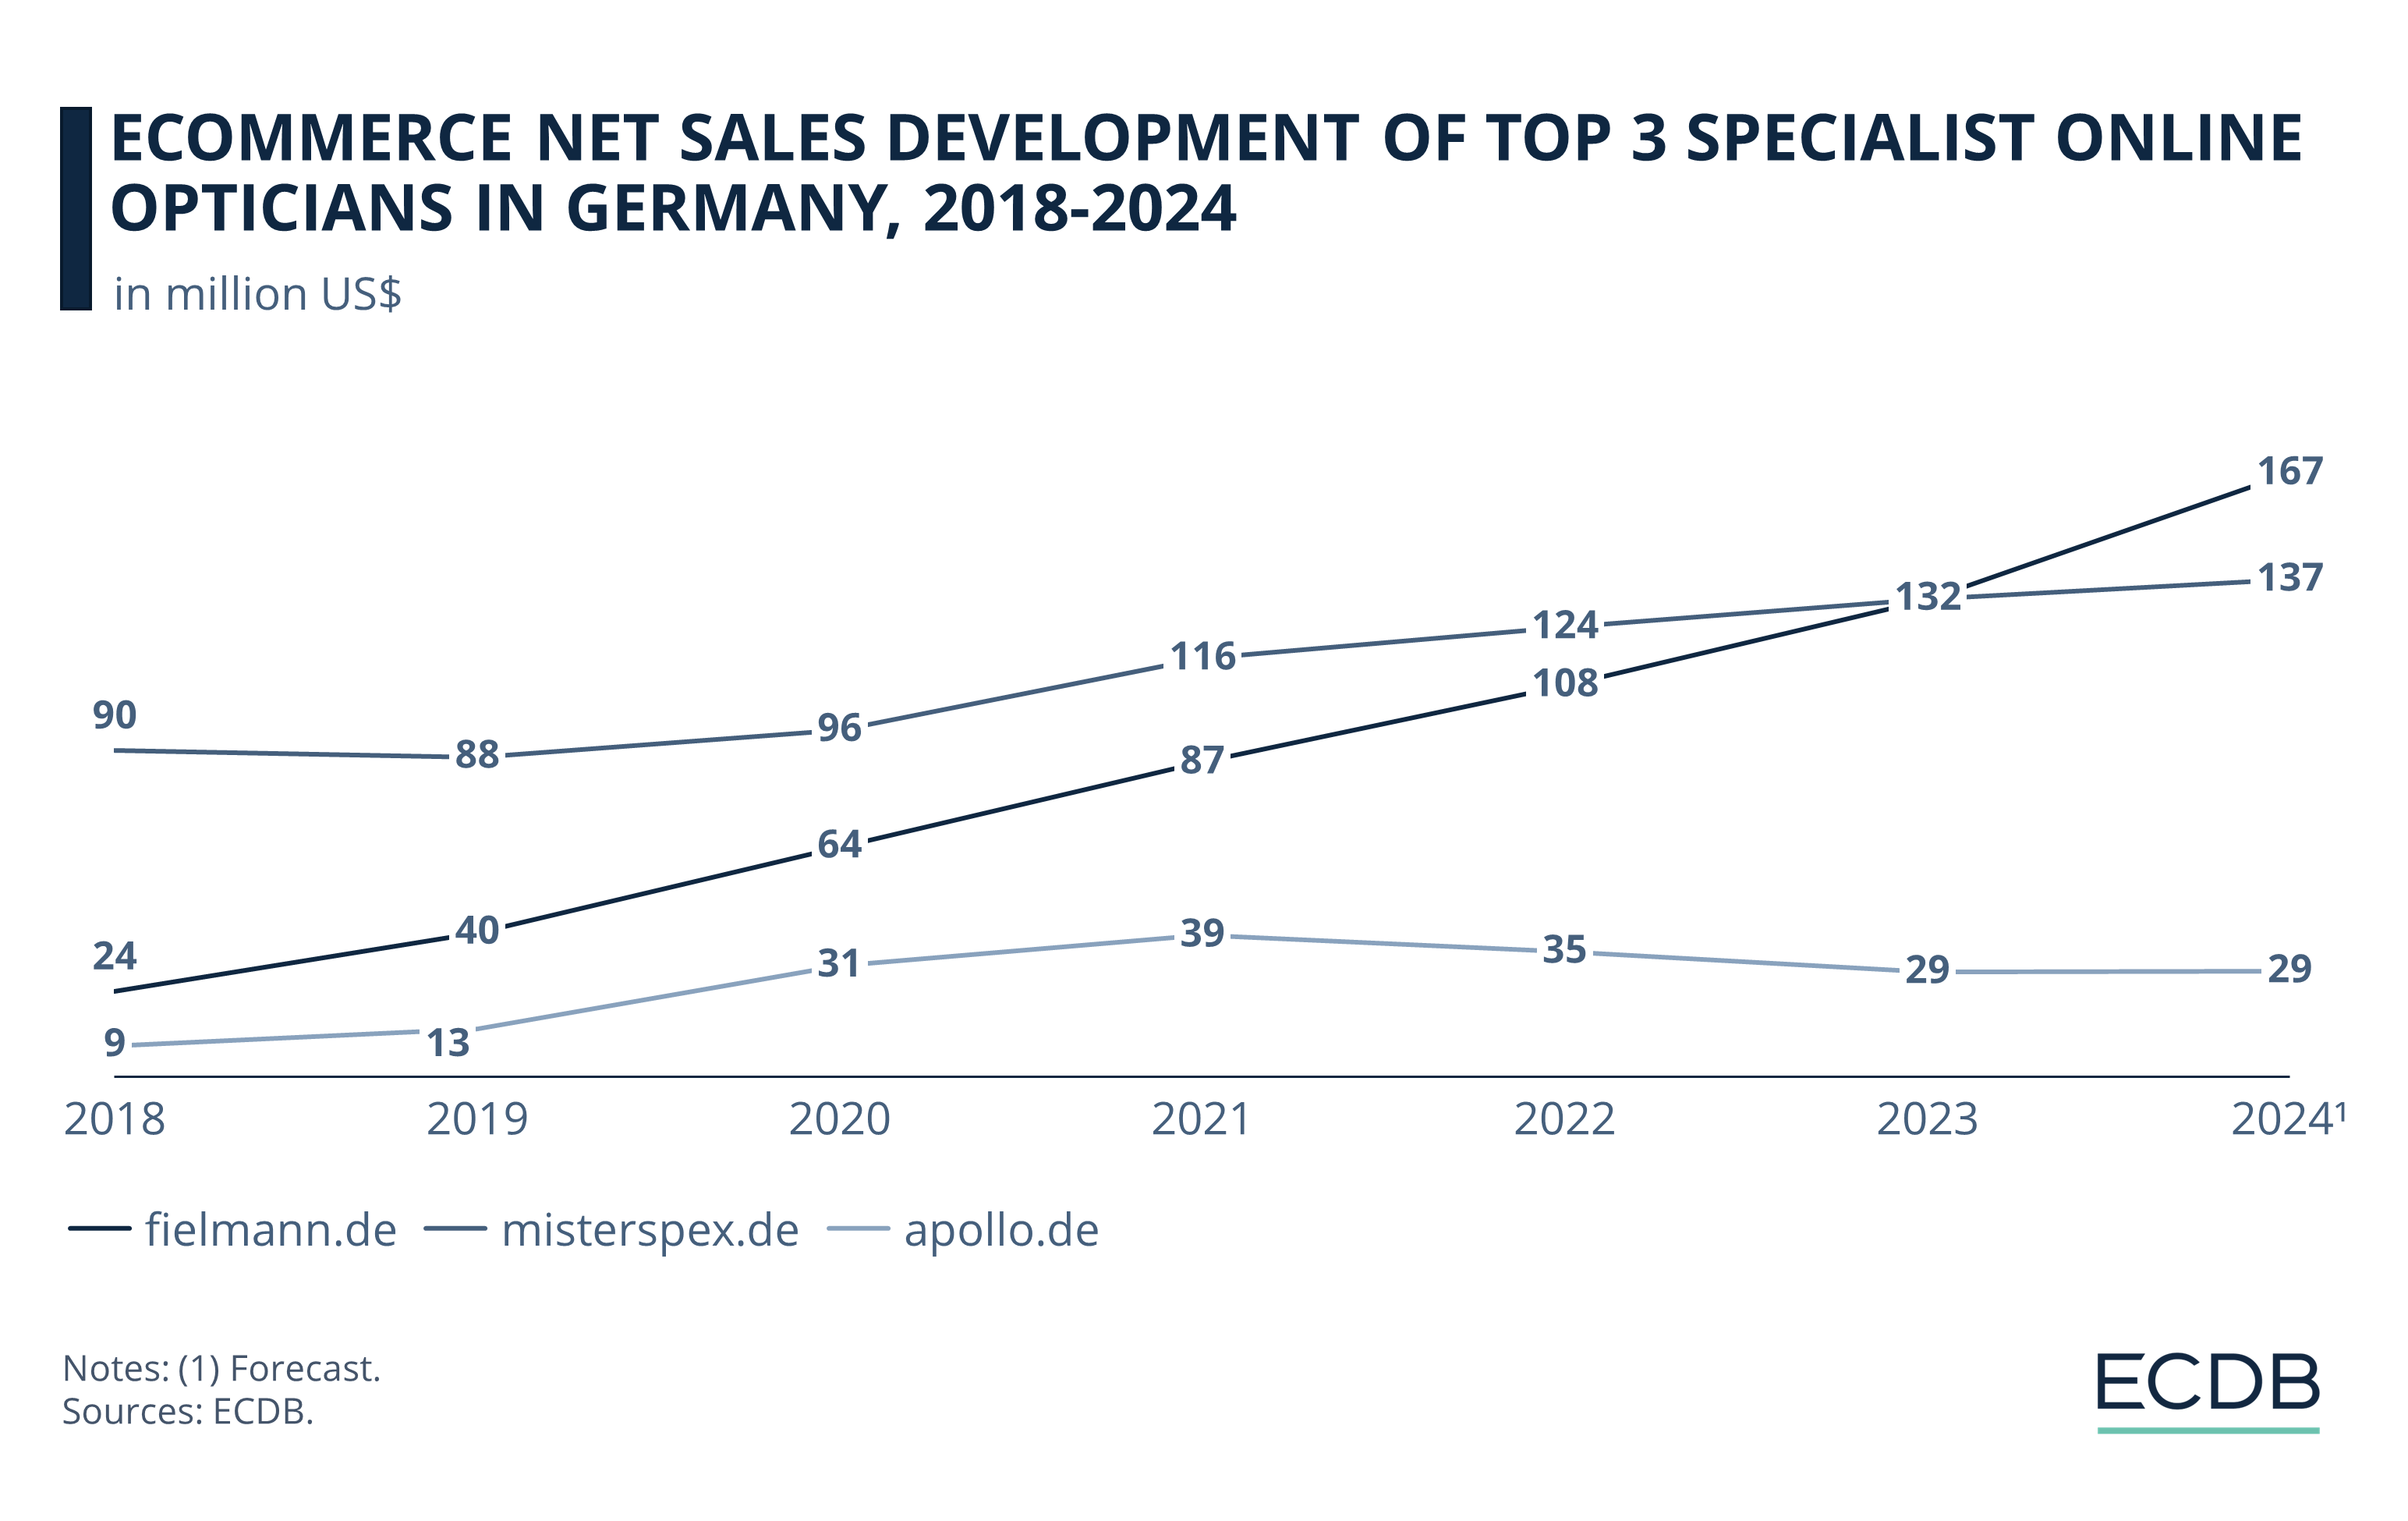 eCommerce Net Sales Development of Top 3 Specialist Online Opticians in Germany, 2018-2024